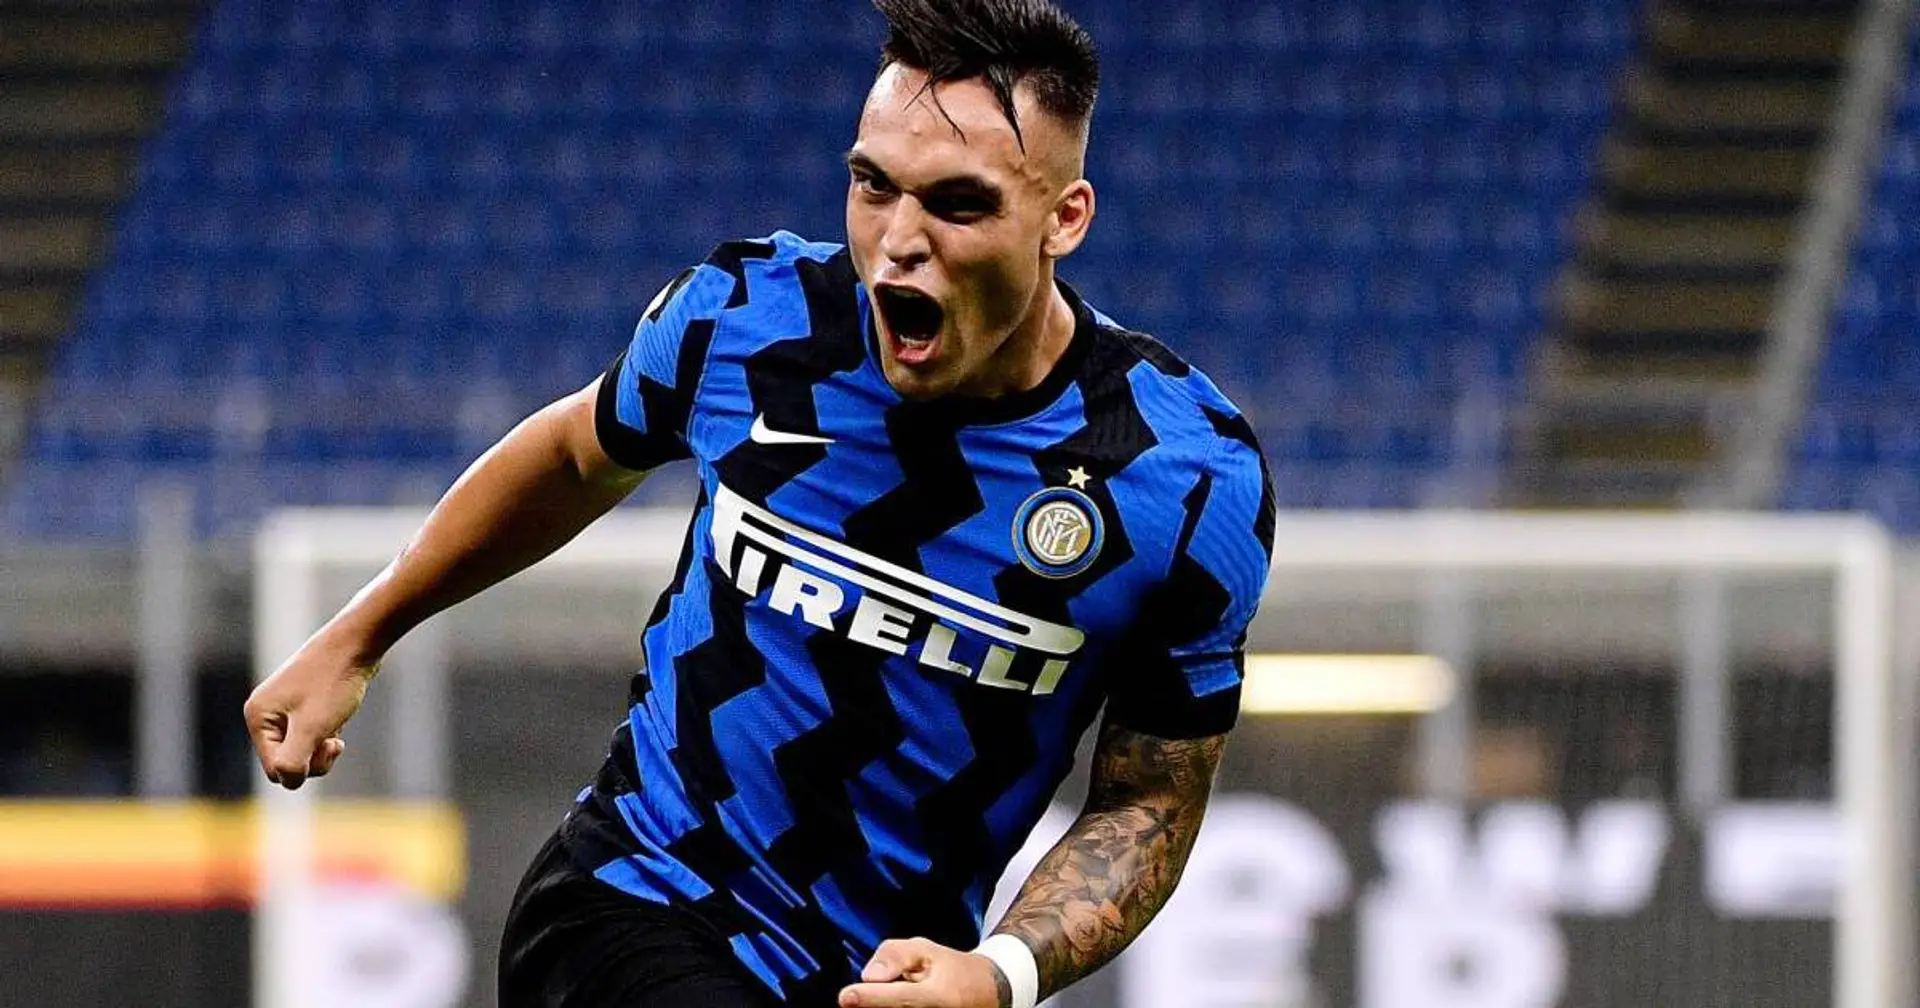 Un golazo de Lautaro ayudó al Inter a tumbar al Napoli, rival europeo del Barça